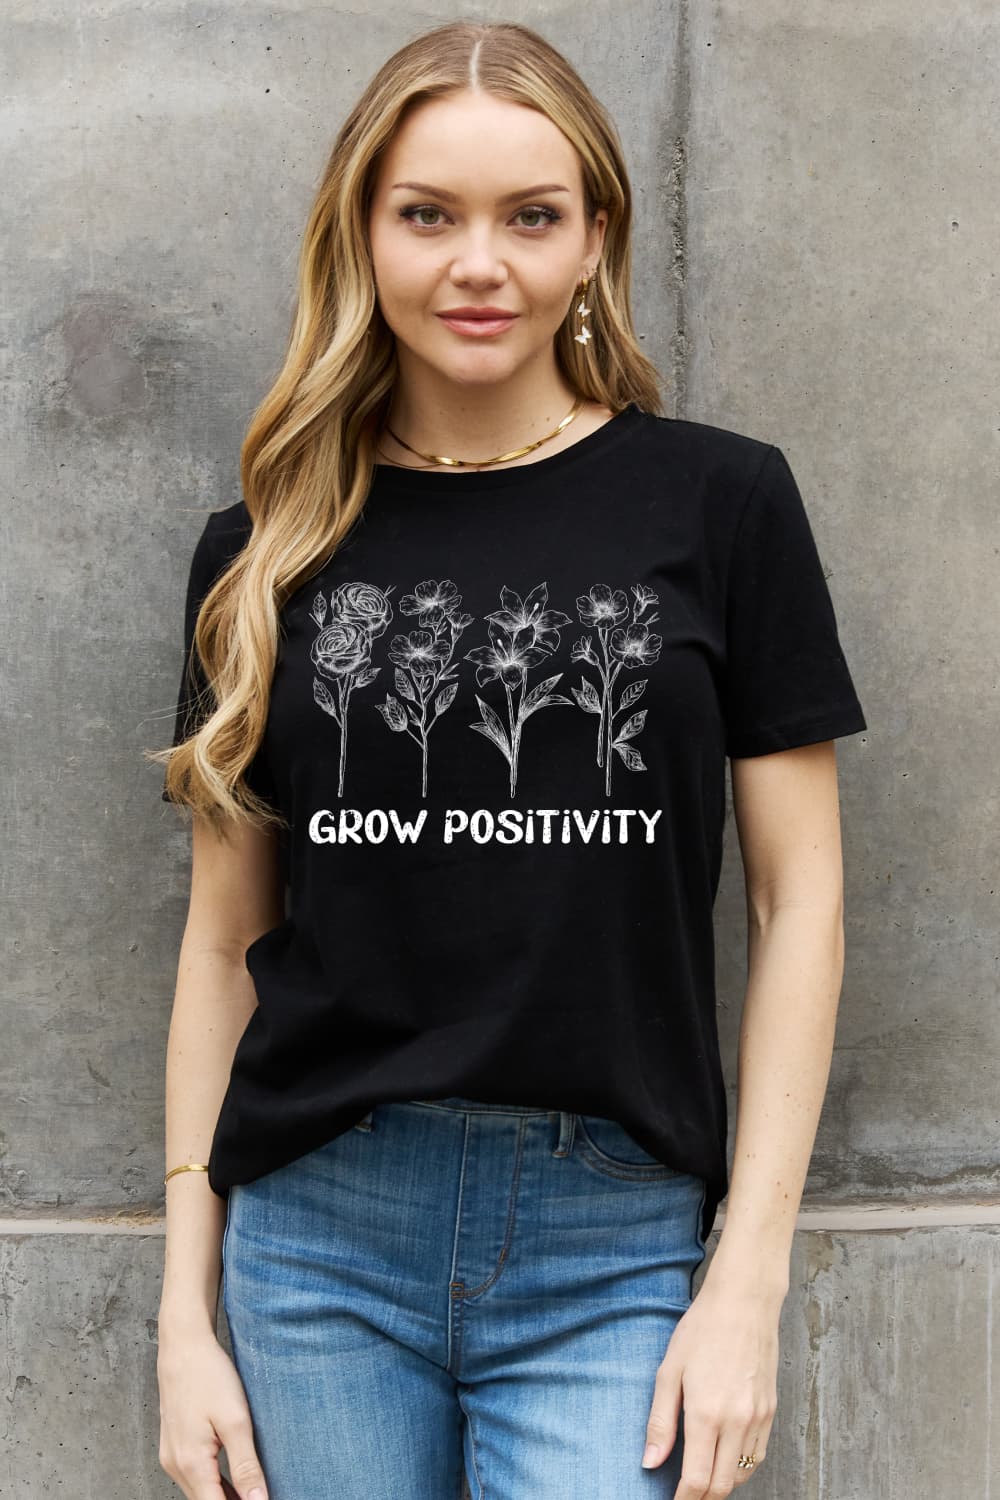 Simply Love GROW POSITIVITY Graphic Cotton Tee